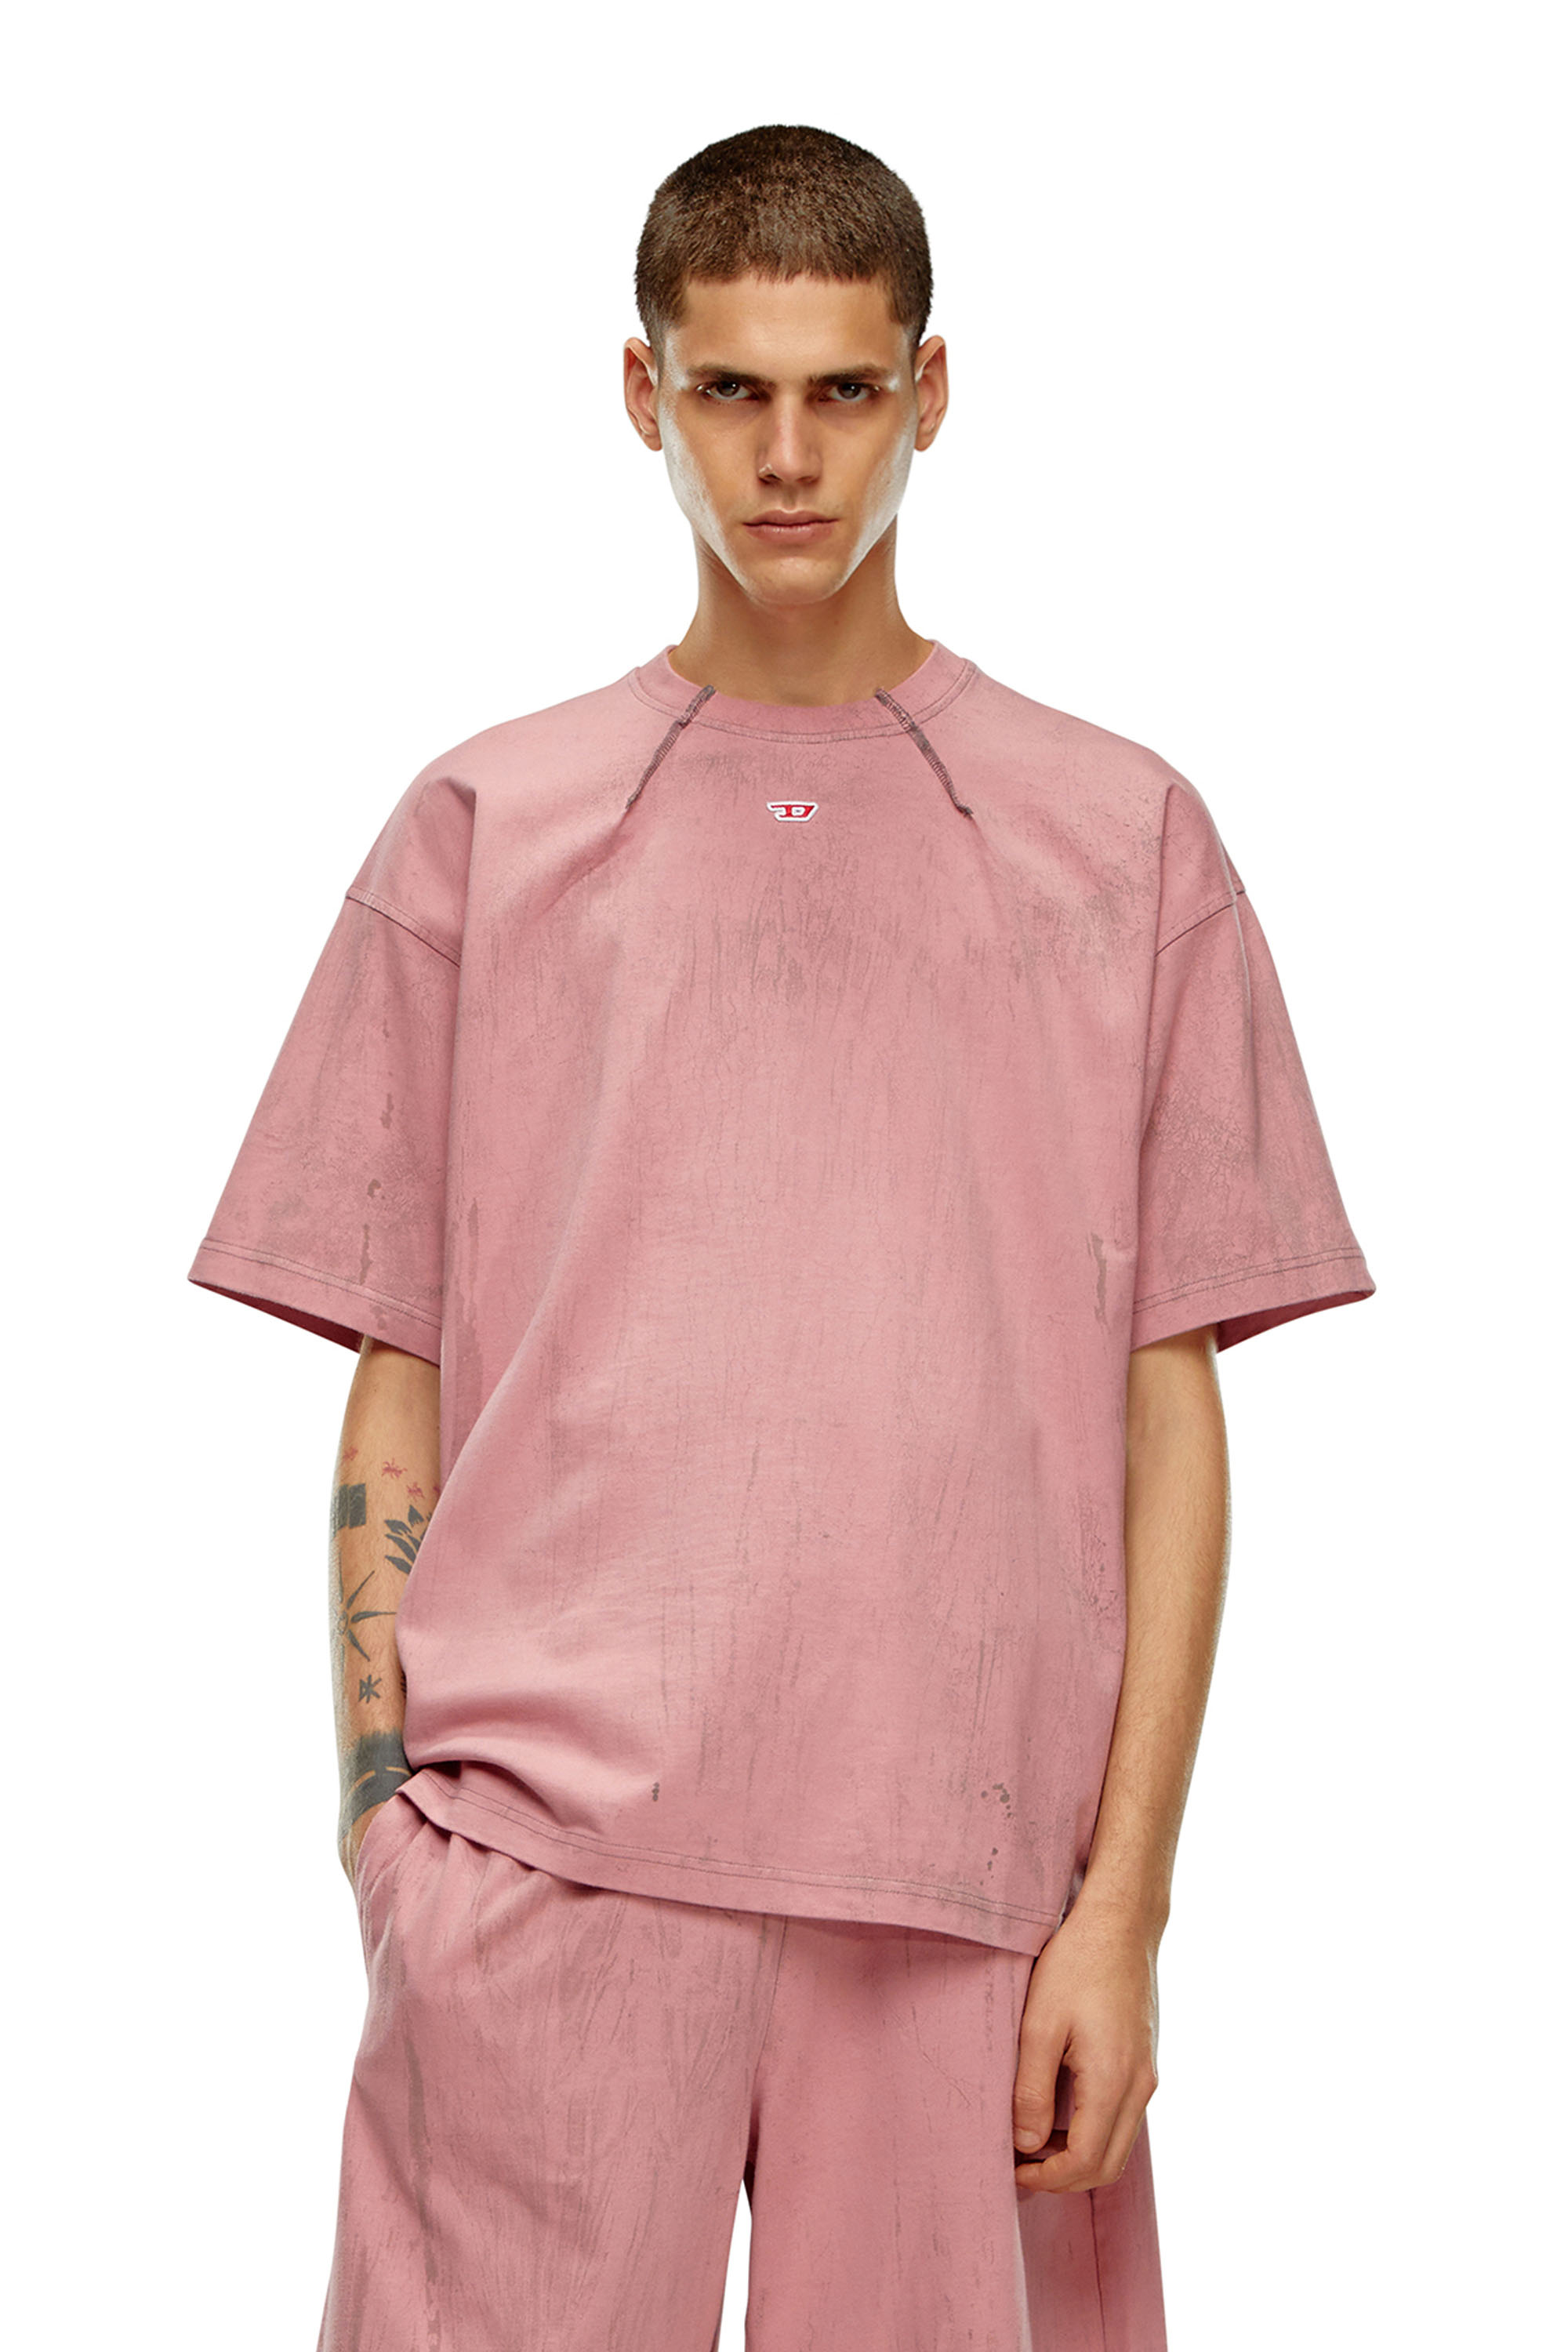 Diesel - T-shirt in plaster effect jersey - T-Shirts - Man - Pink